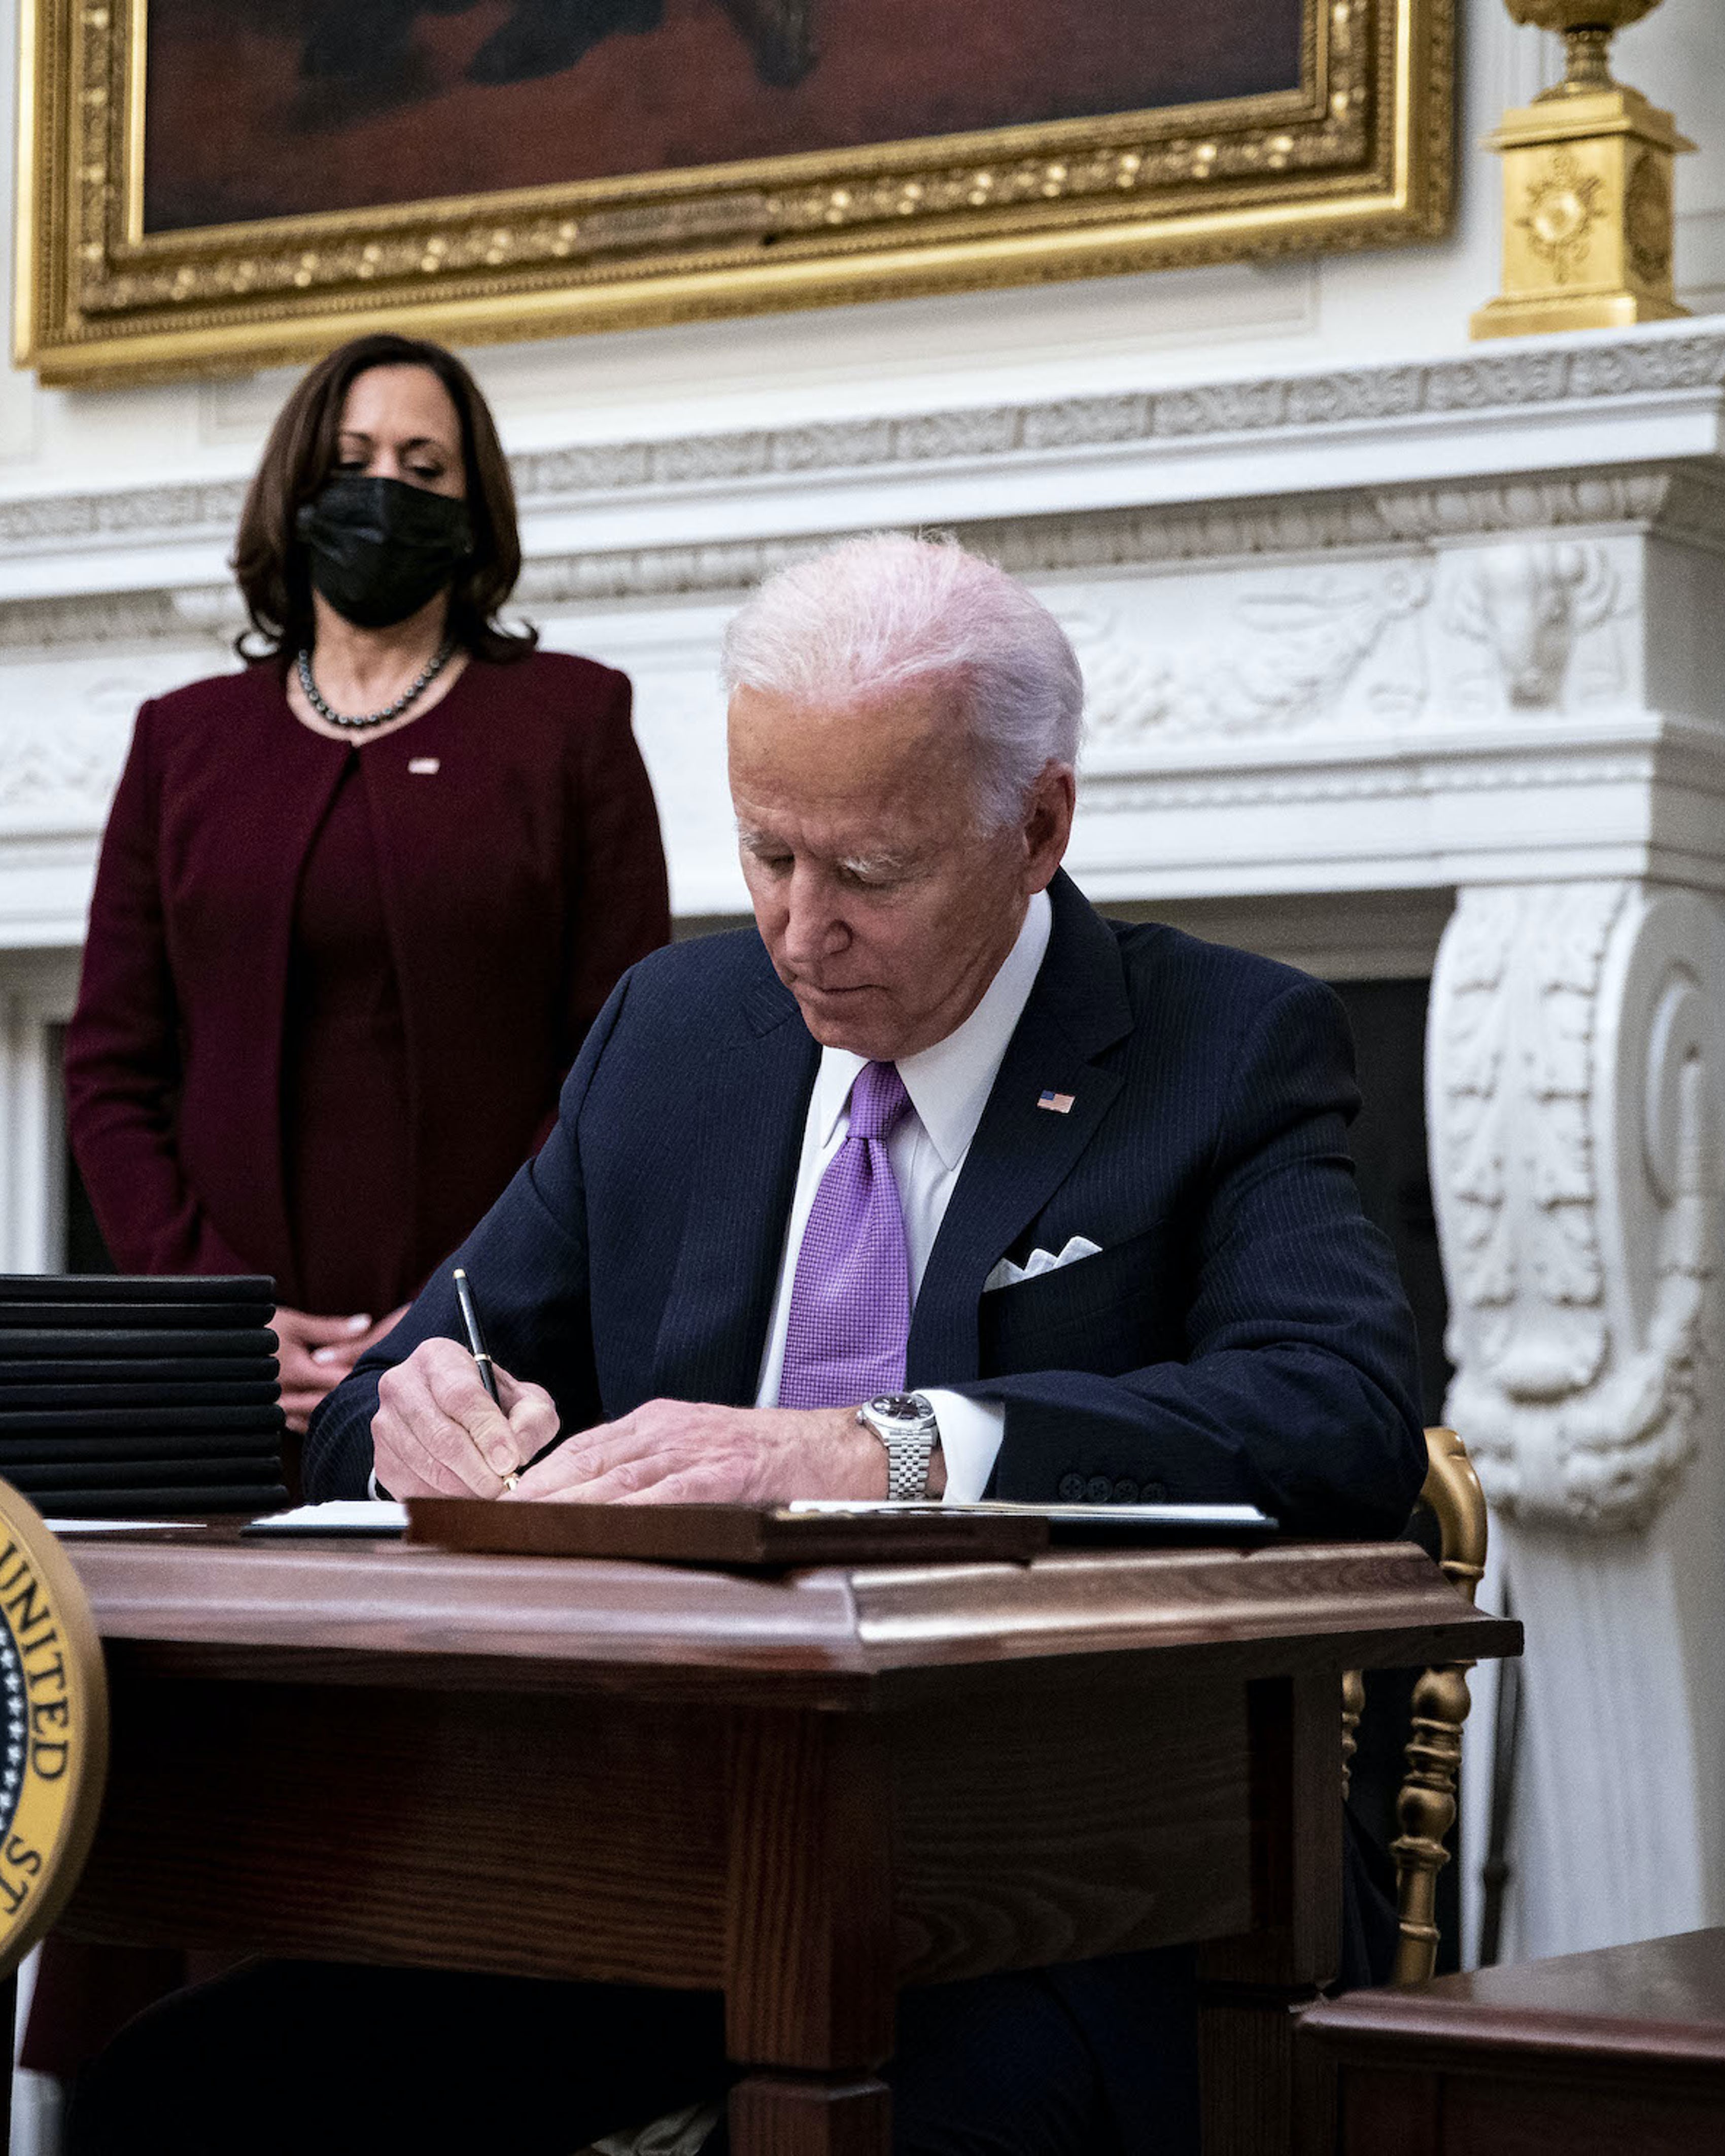 Joe-Biden signs executive orders